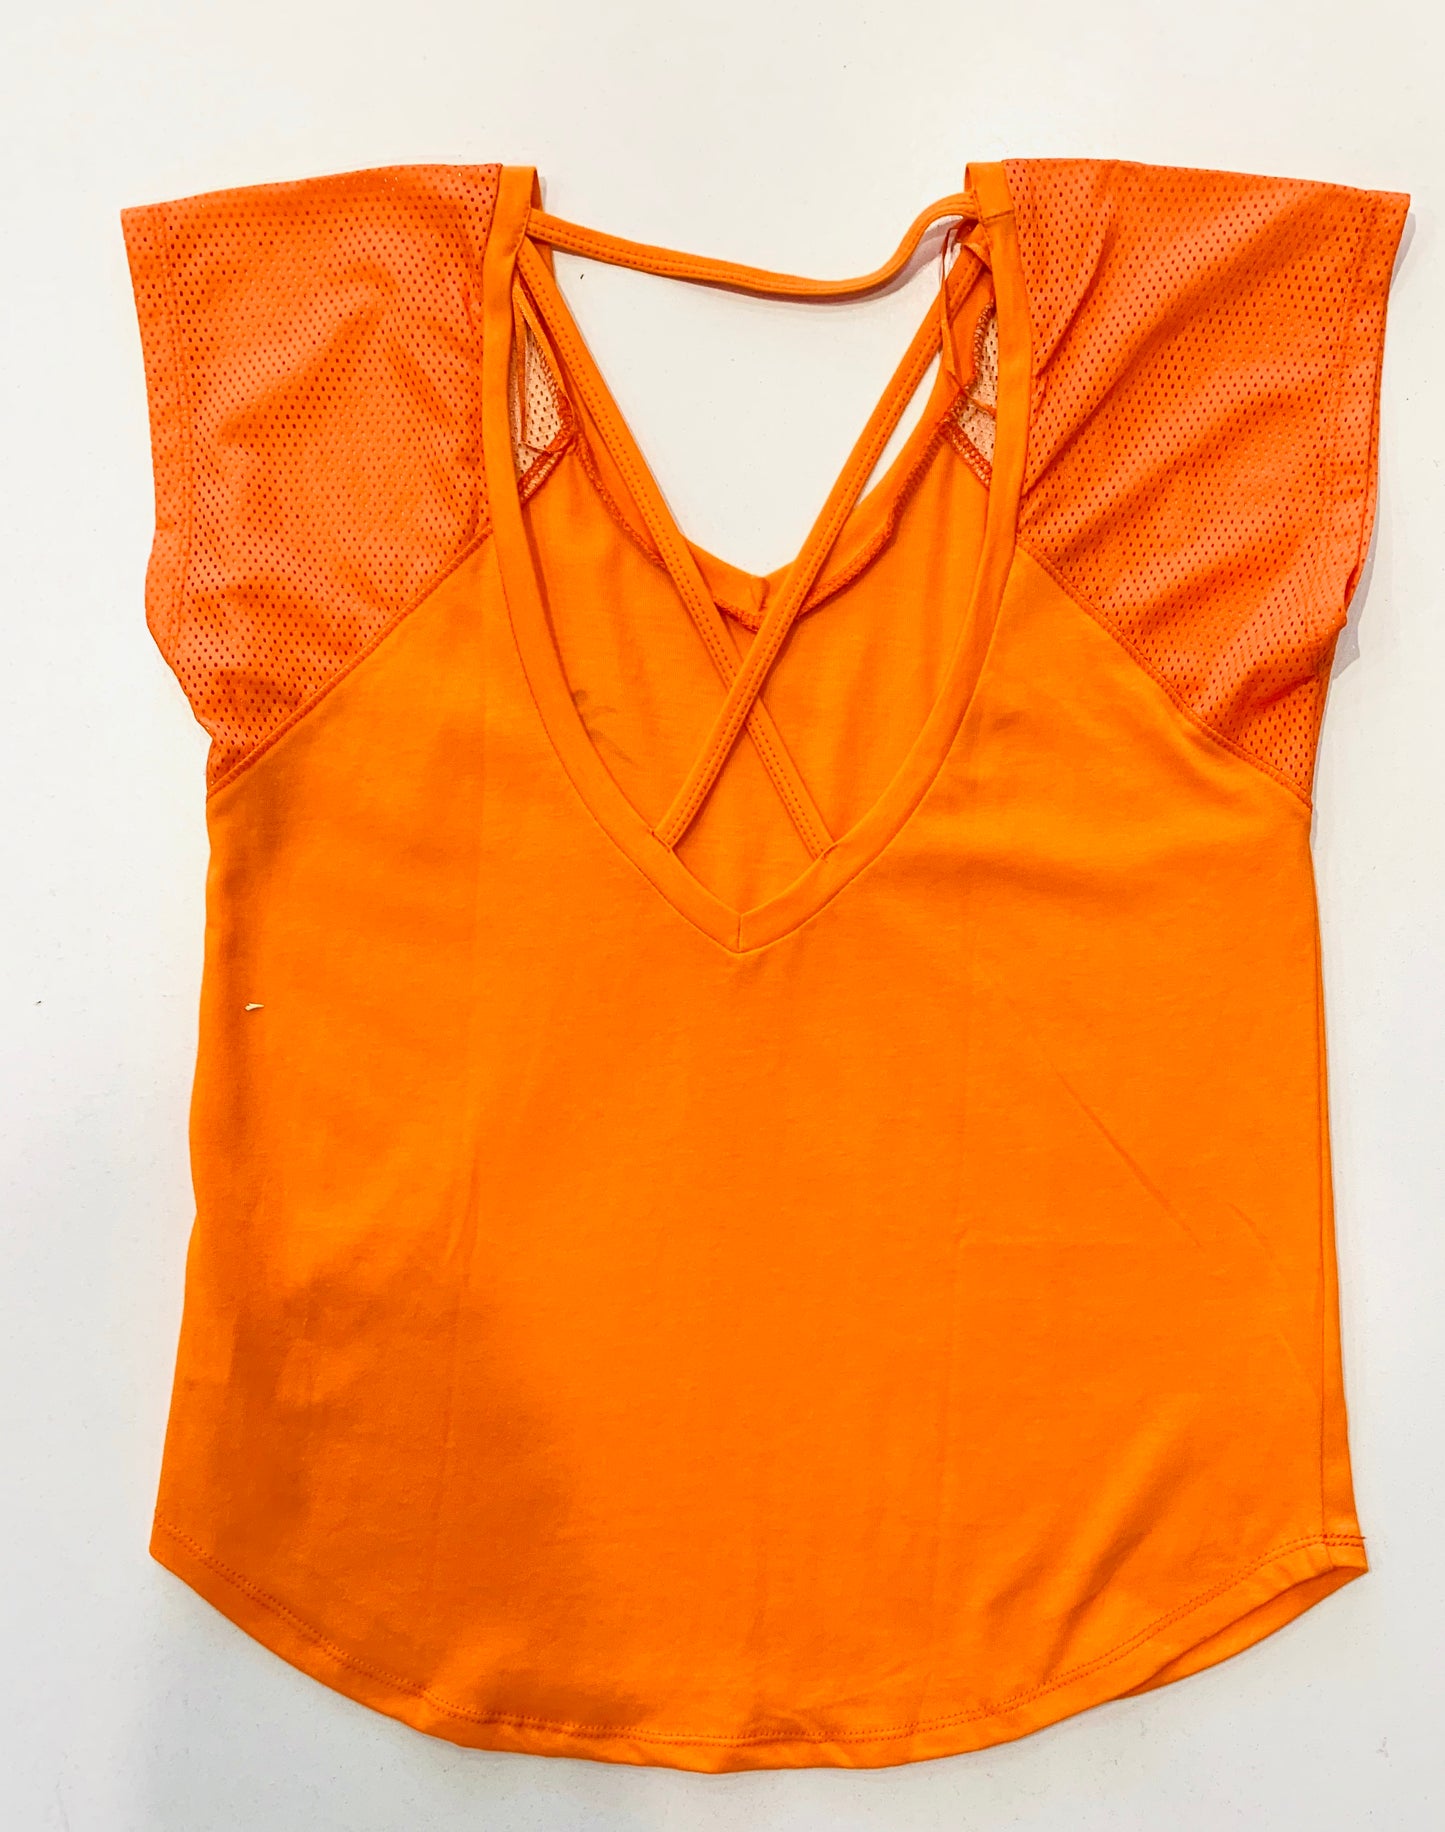 ORANGE Strappy Back Tee Shirt. Sizes XS/8 - 3XL/20